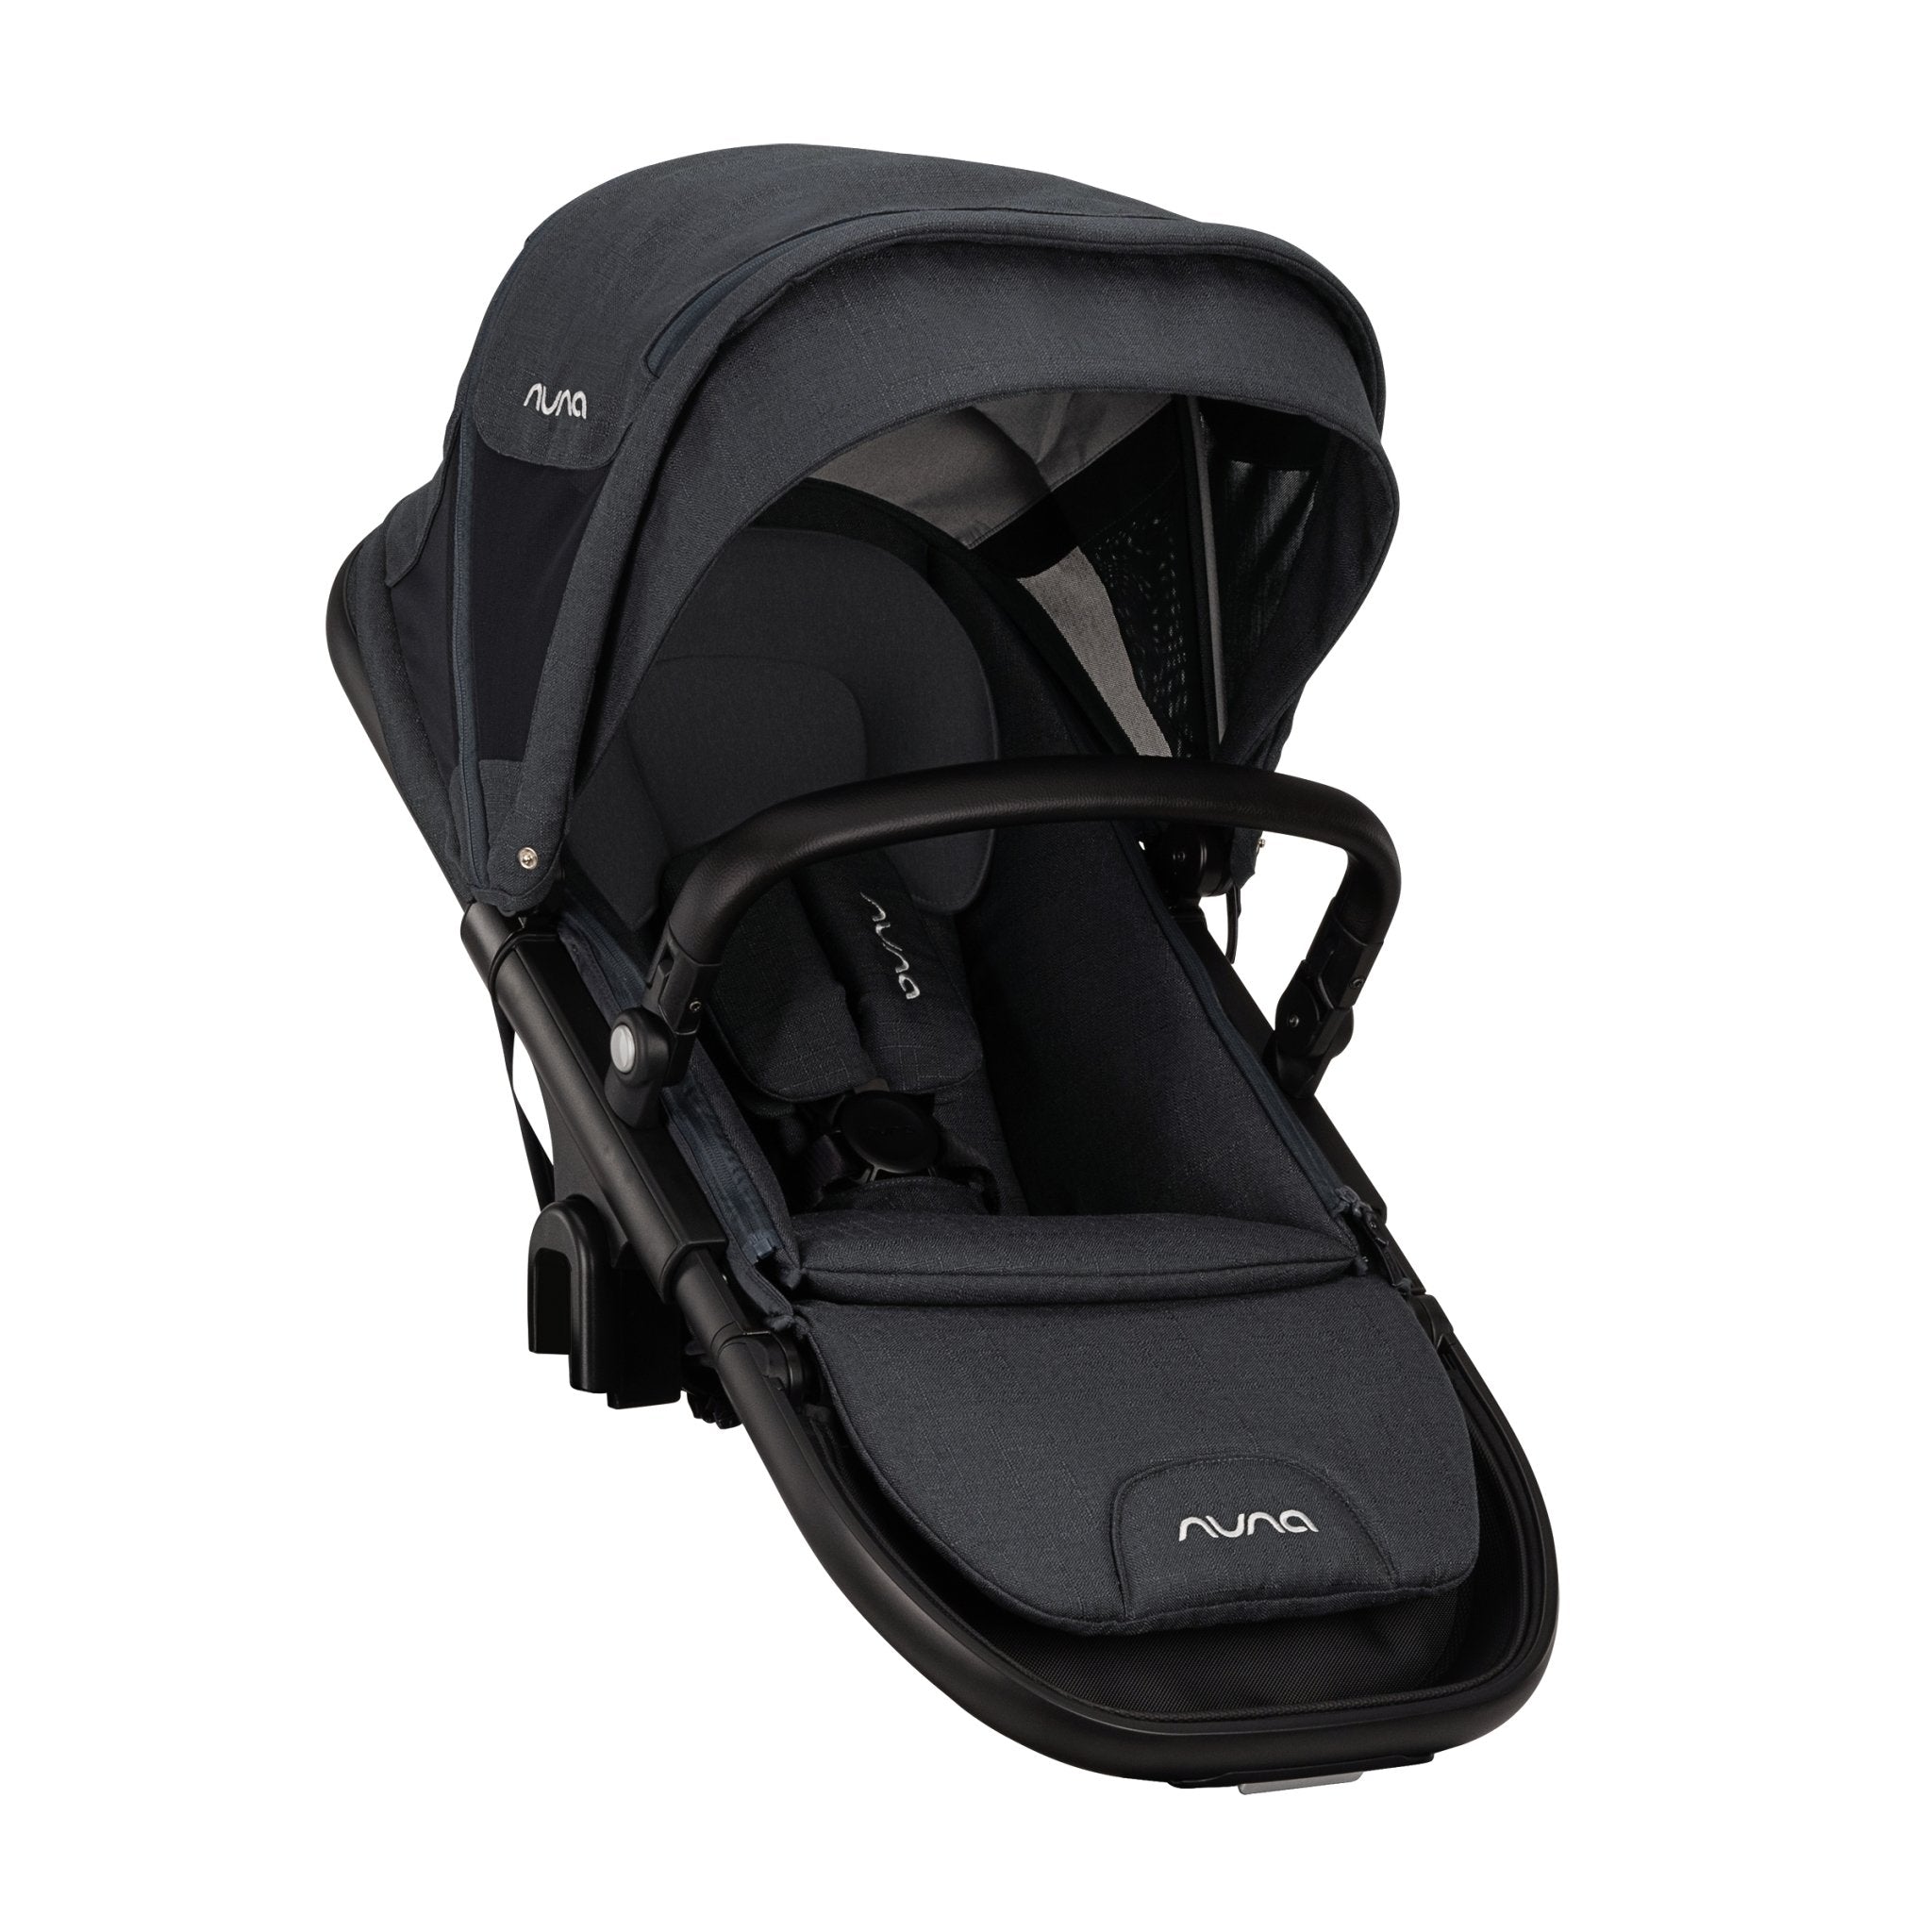 Nuna Demi Grow Stroller 2022 with Accessories - ANB Baby -8720246549157$500 -$1000